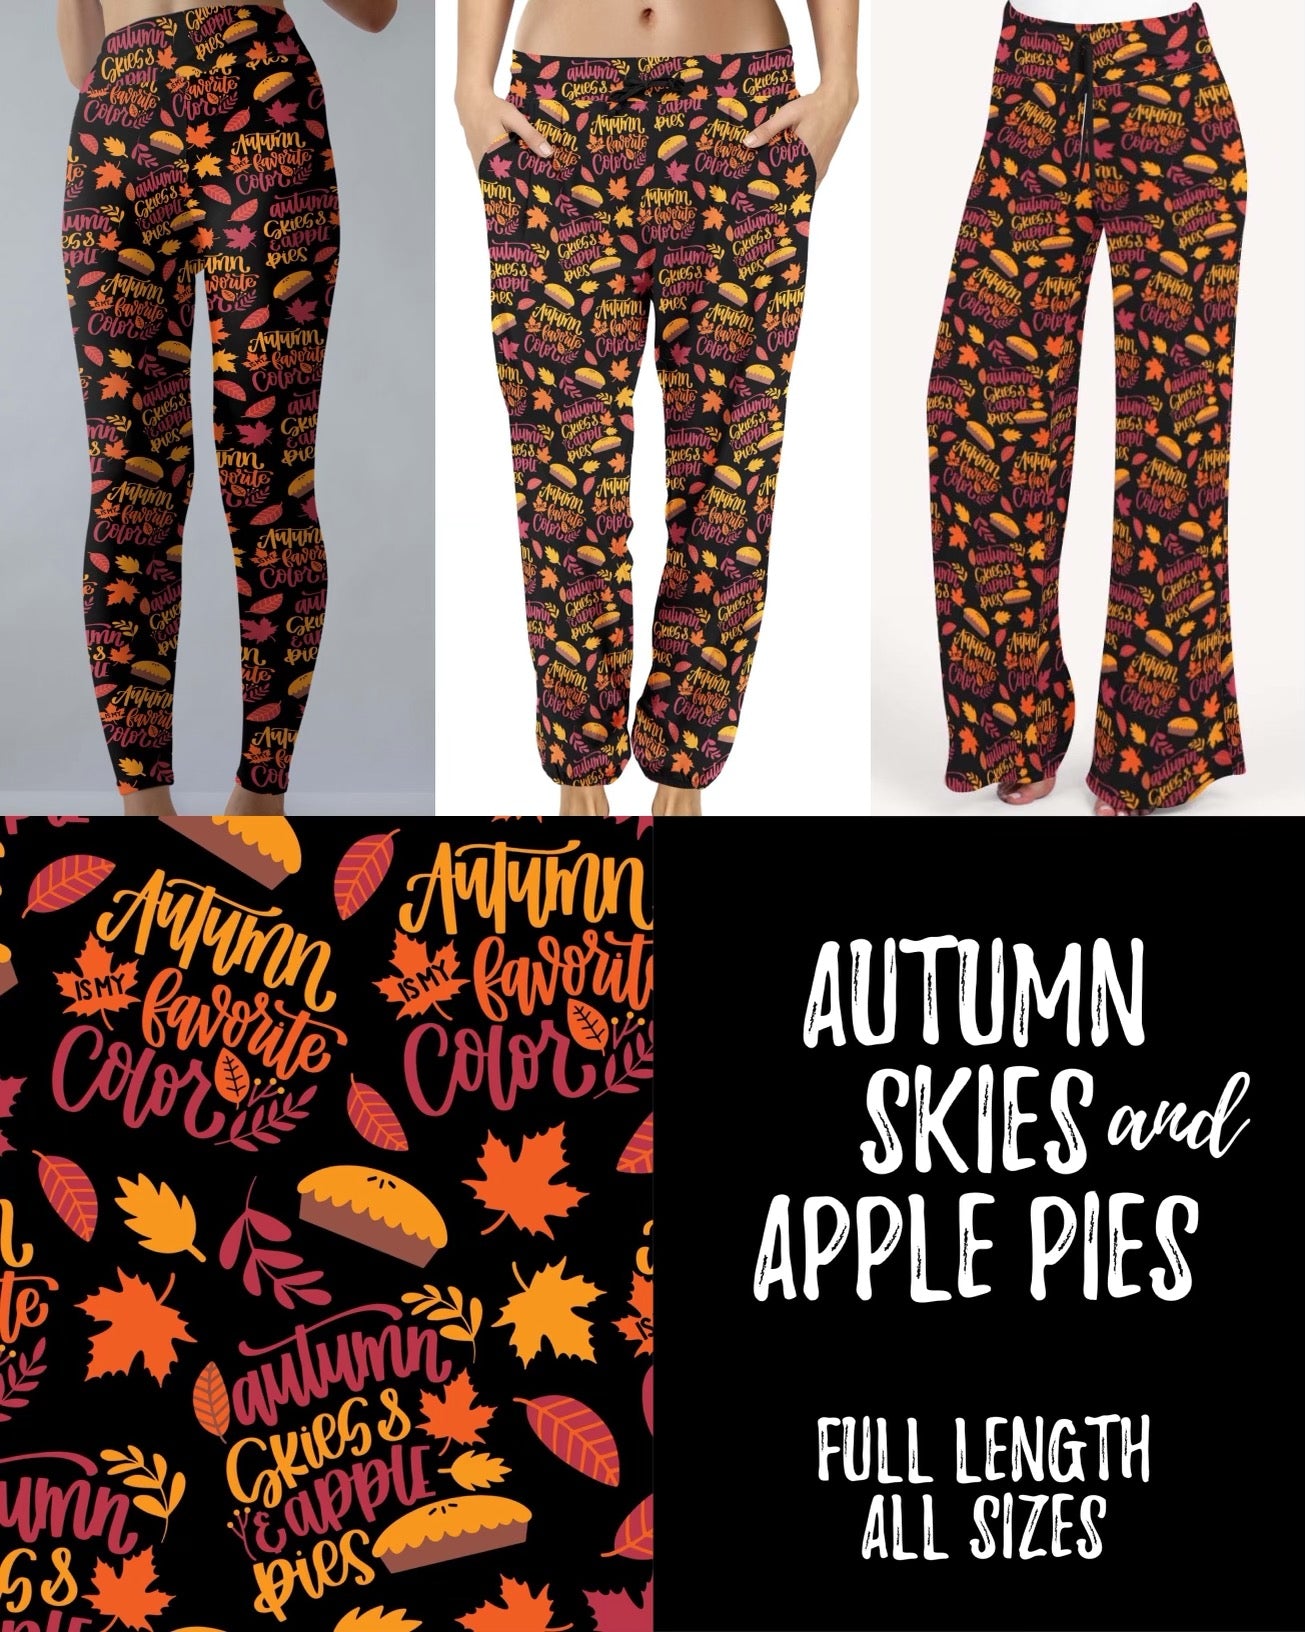 Autumn Skies and Apple Pies